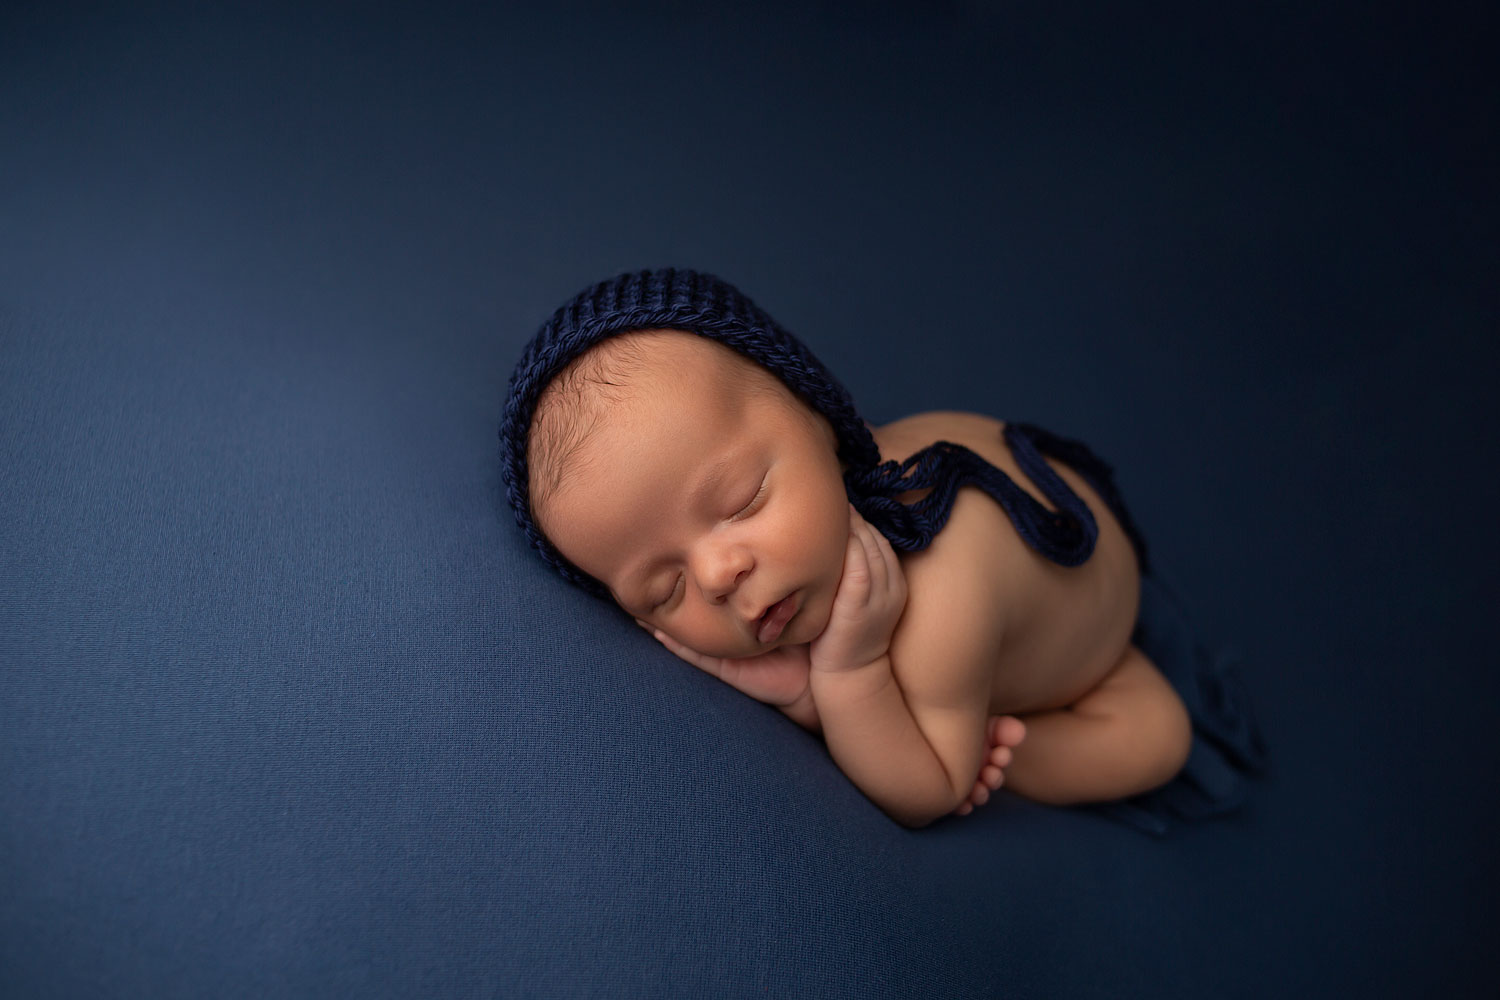 newborn-posed-on-blue